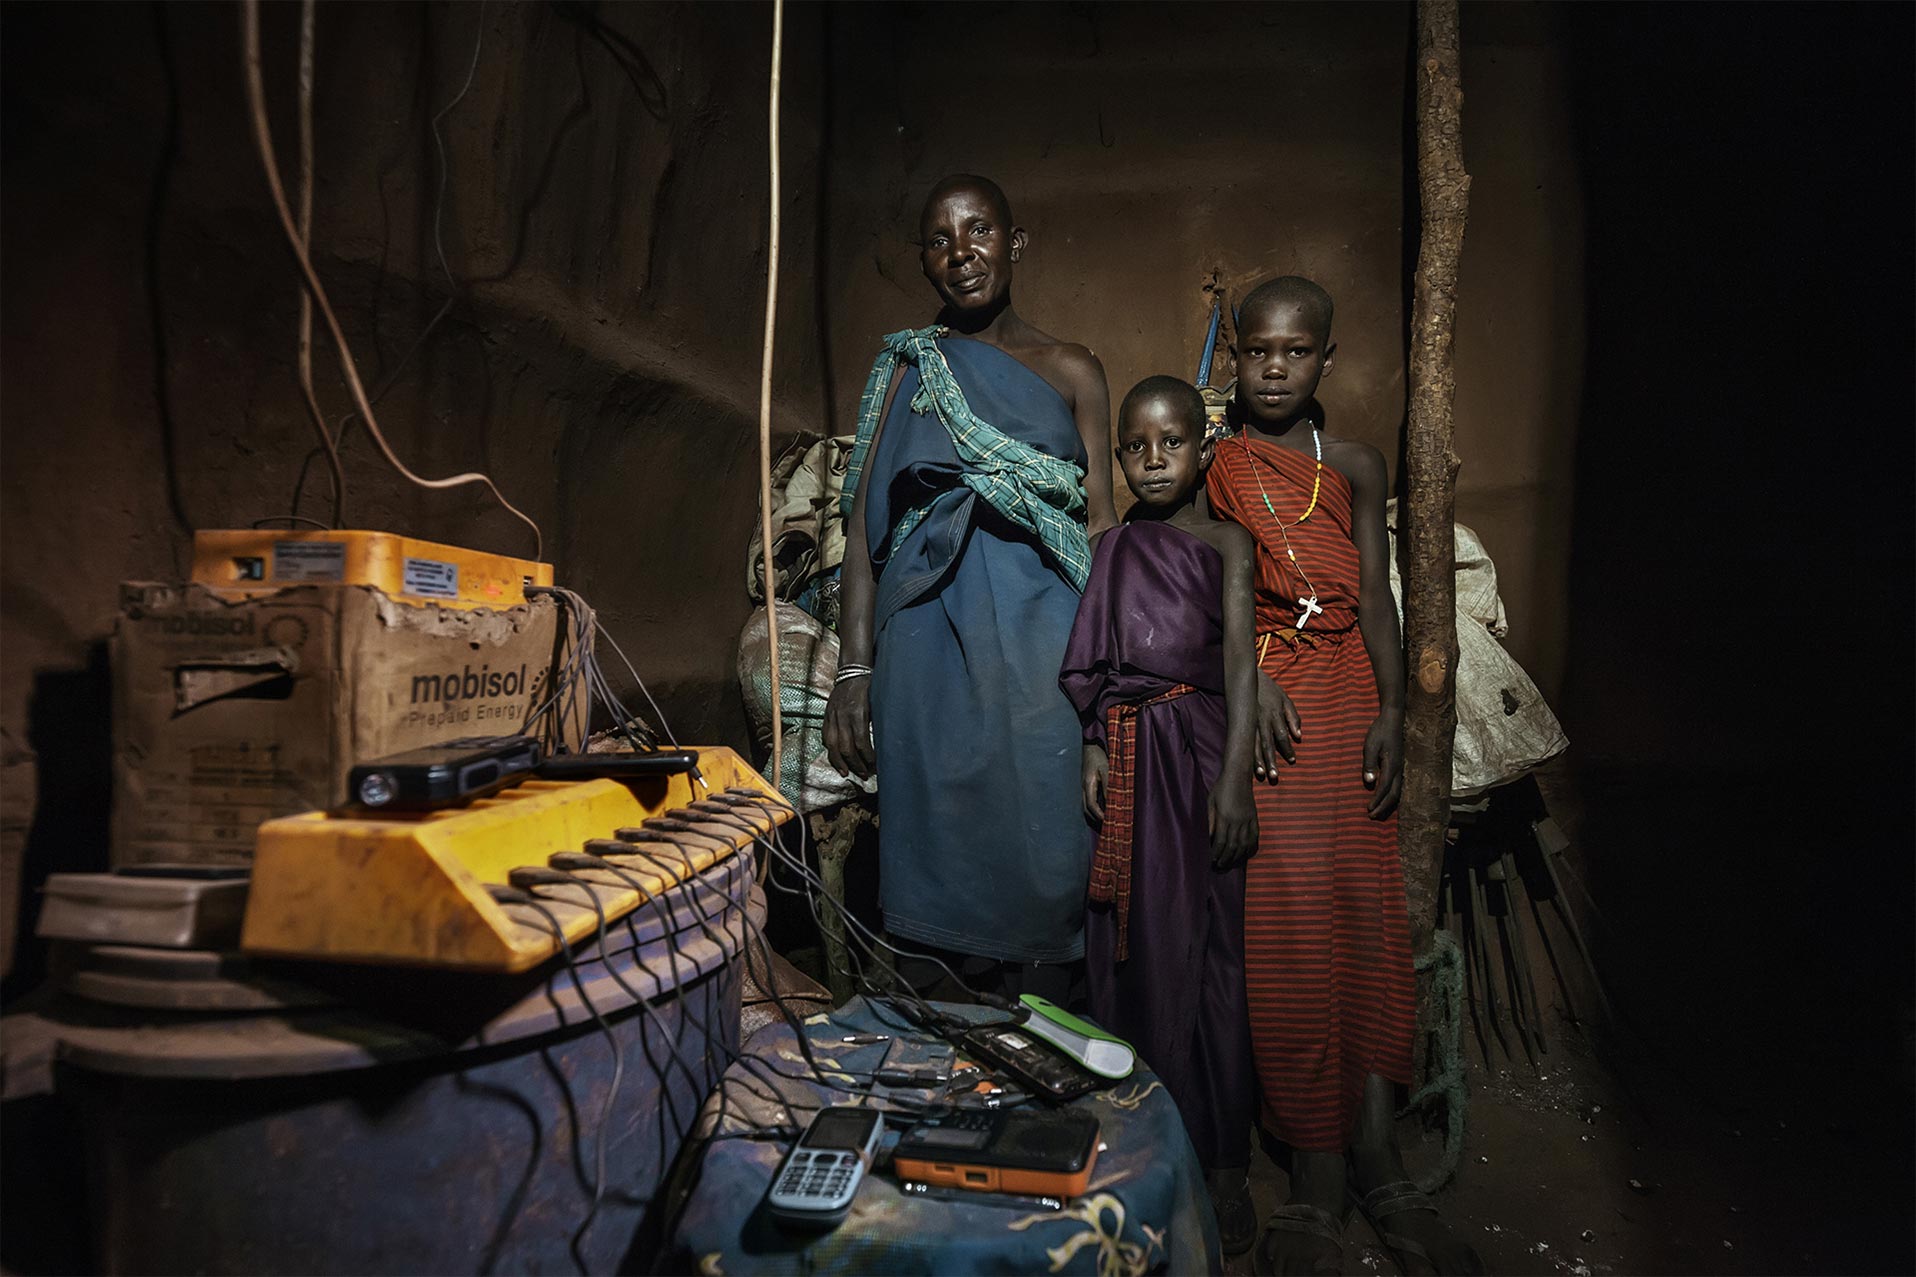  Cellulari in carica in una casa africana. Energy portraits - Reportage del fotografo Marco Garofalo